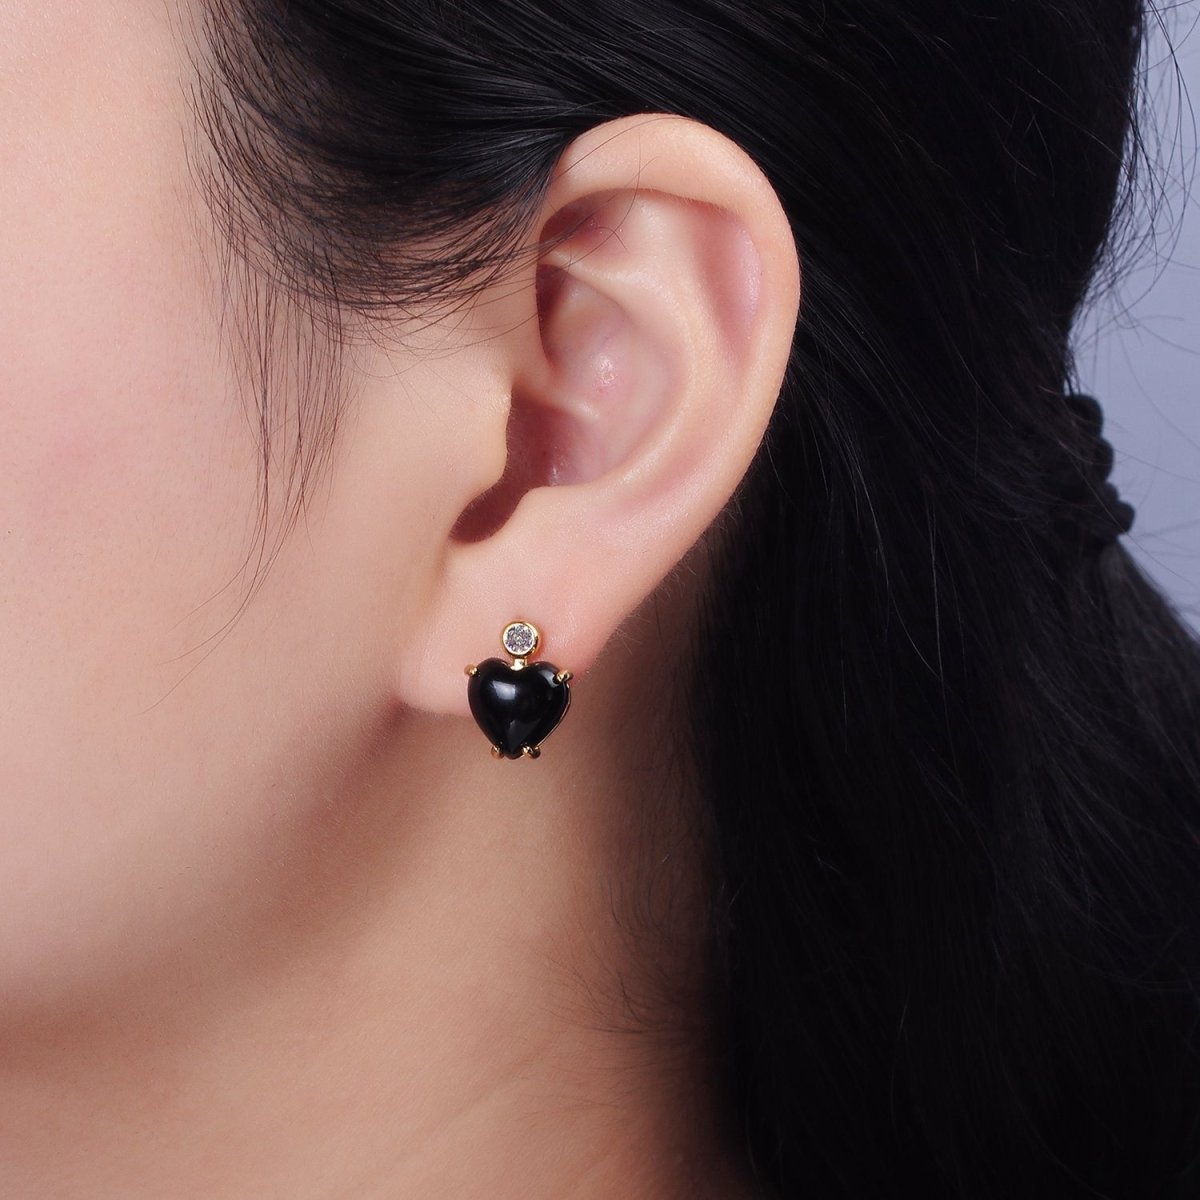 14K Gold Filled Black Onyx Heart Clear CZ Drop Stud Earrings | AE983 - DLUXCA